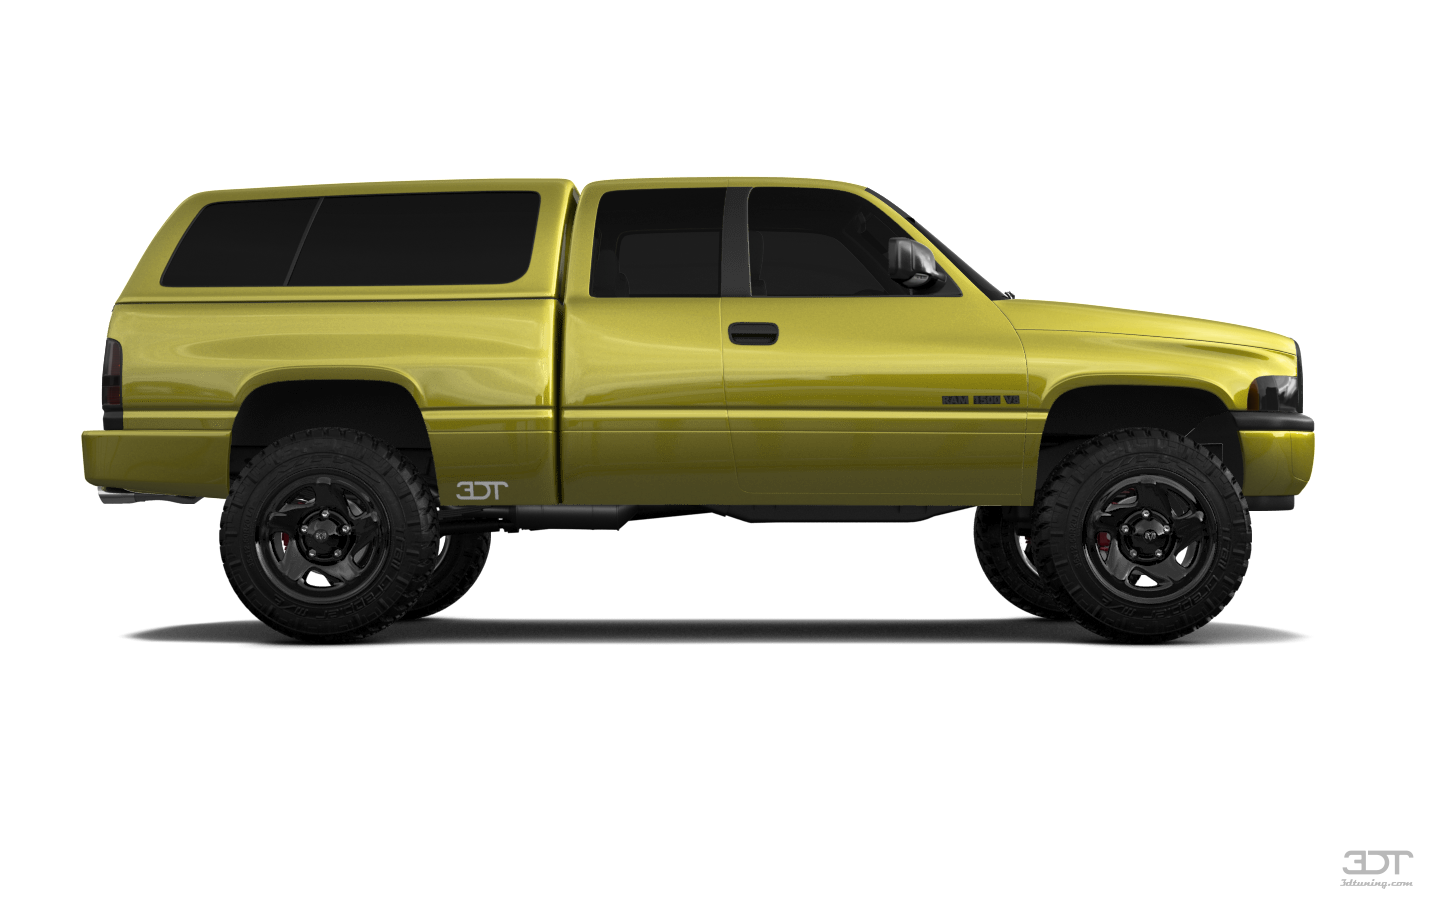 Dodge Ram 1500 Club Cab Pickup Truck 1999